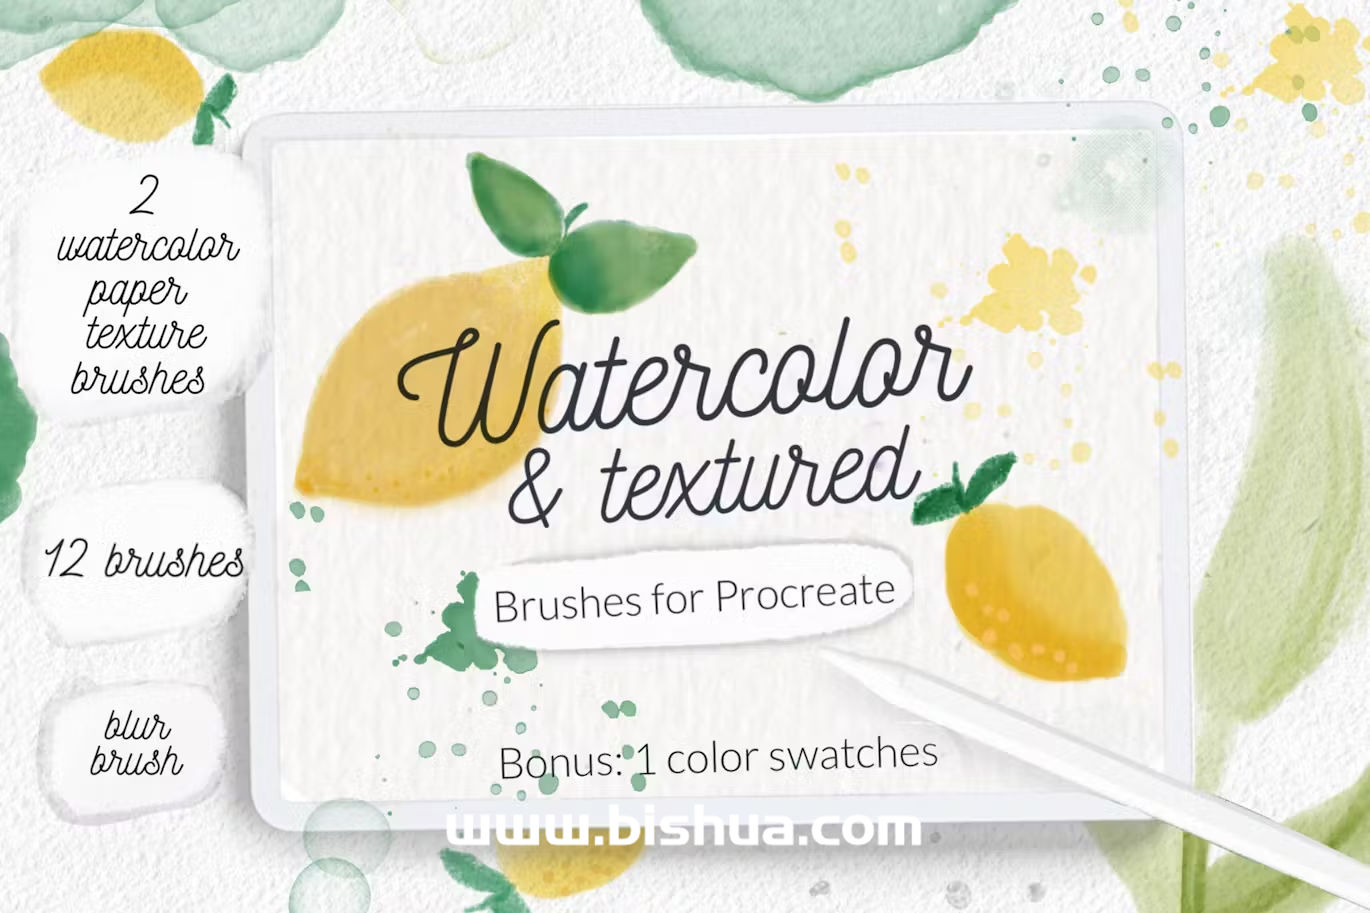 Procreate笔刷+色卡丨水彩质感水彩画笔手绘